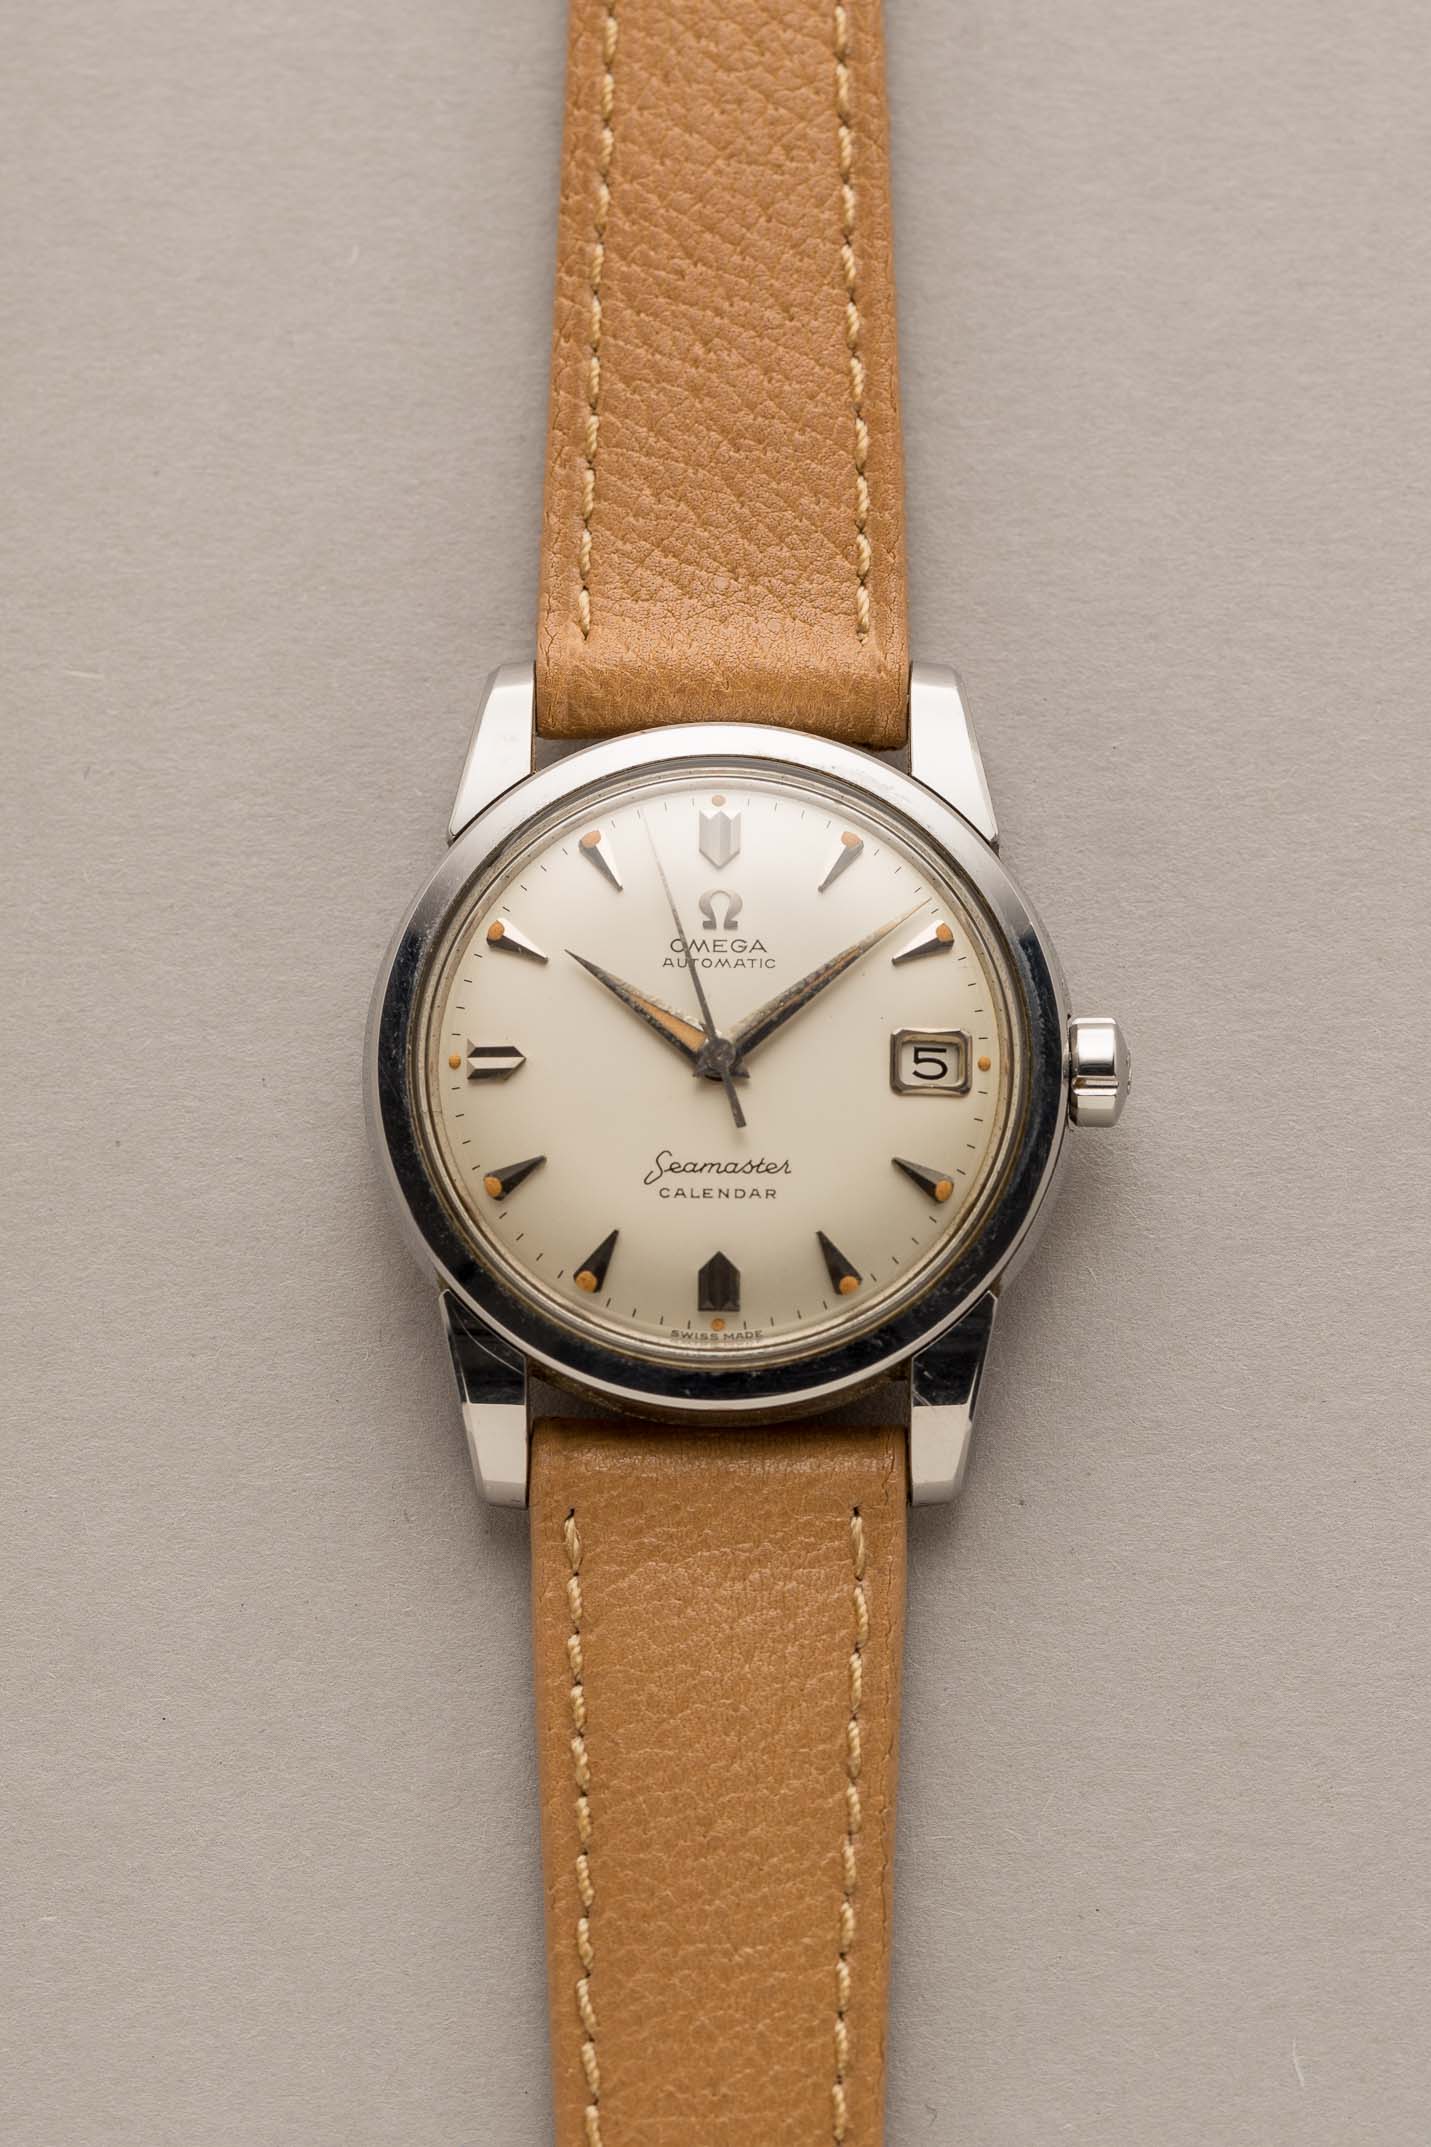 Omega Seamaster Calendar Vintage Automatic Wristwatch 2849 10SC Shuck